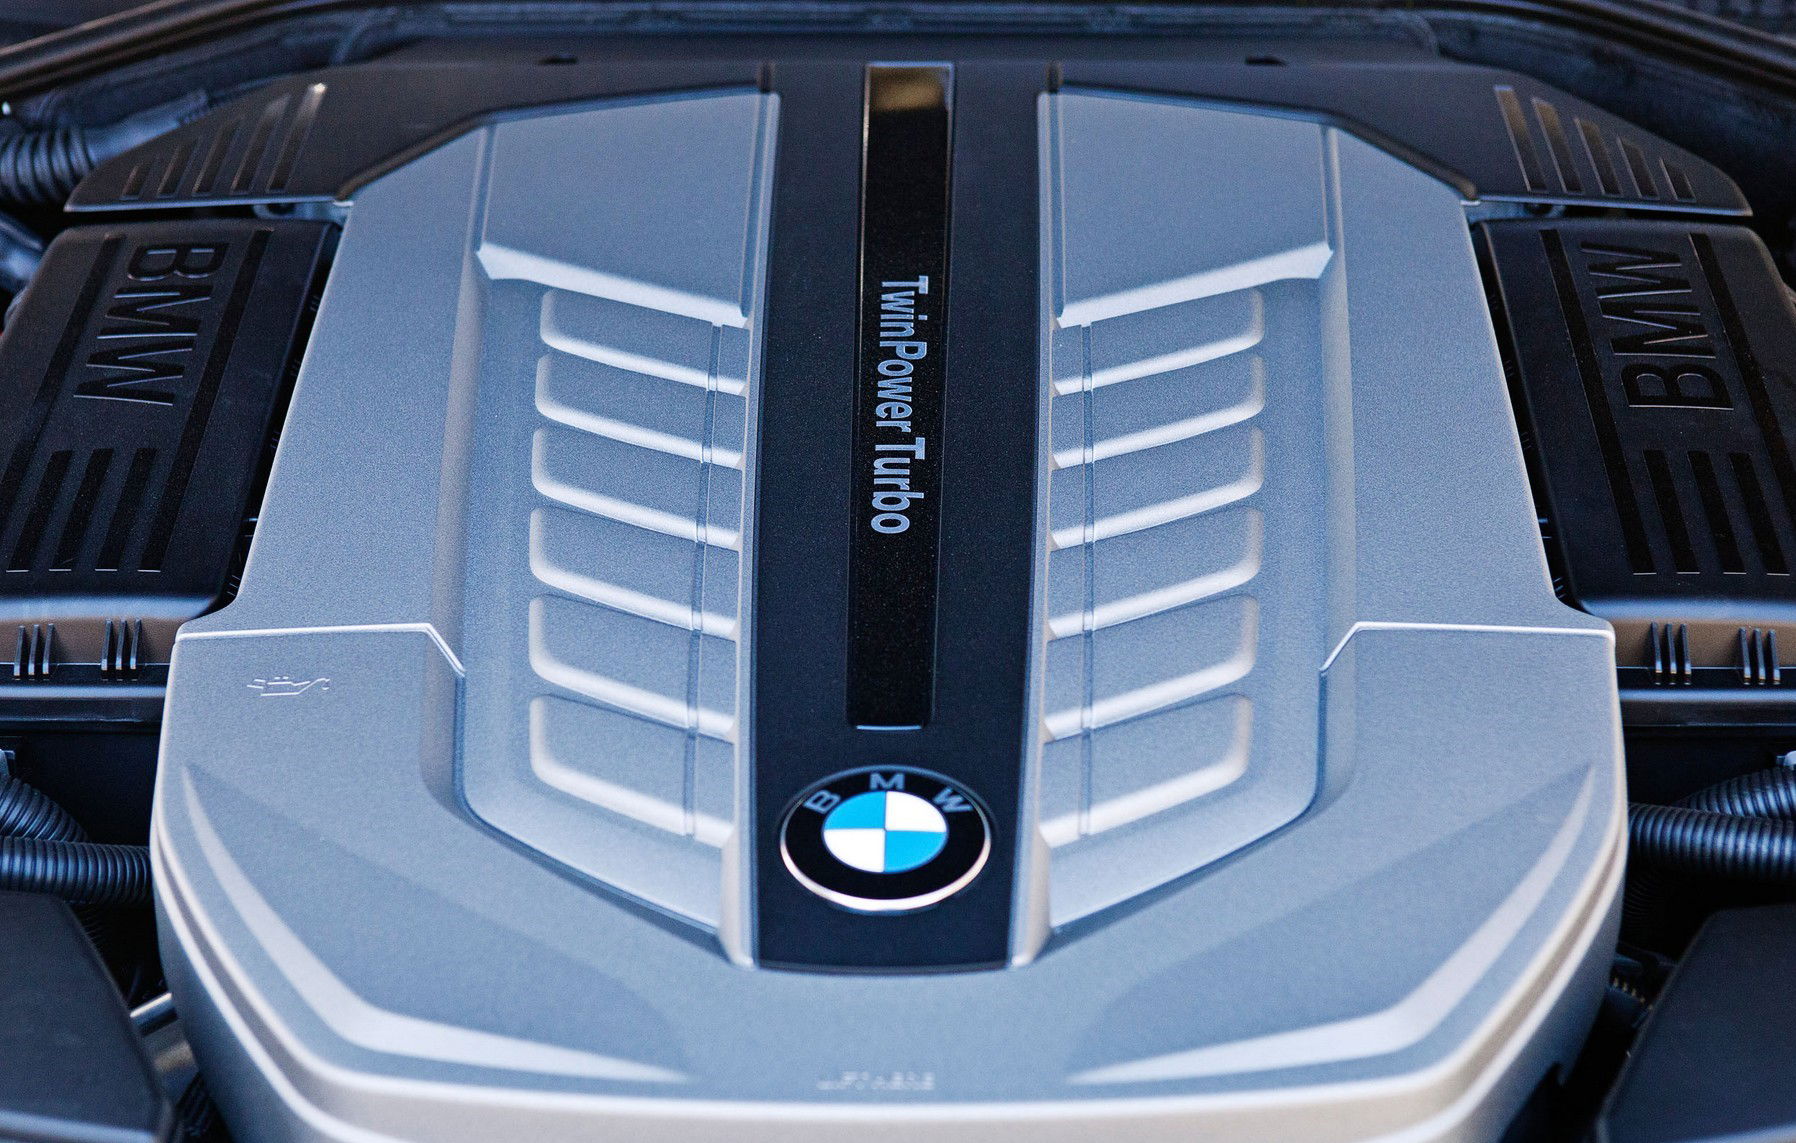 2013 BMW 760LI HSS engine.